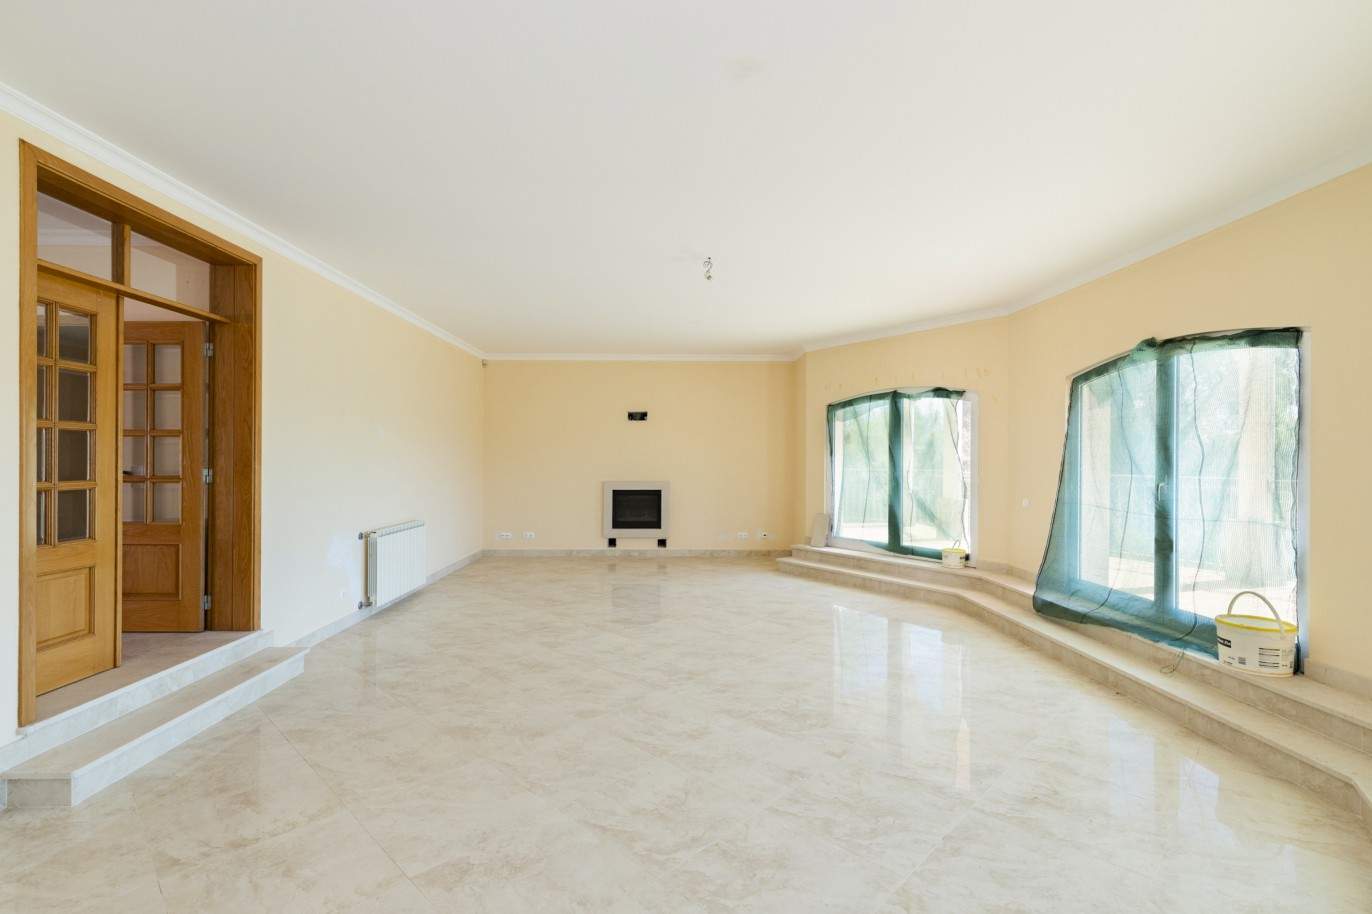 4 Bedroom Villa à vendre à Monte Judeu, Portimão, Algarve_207293